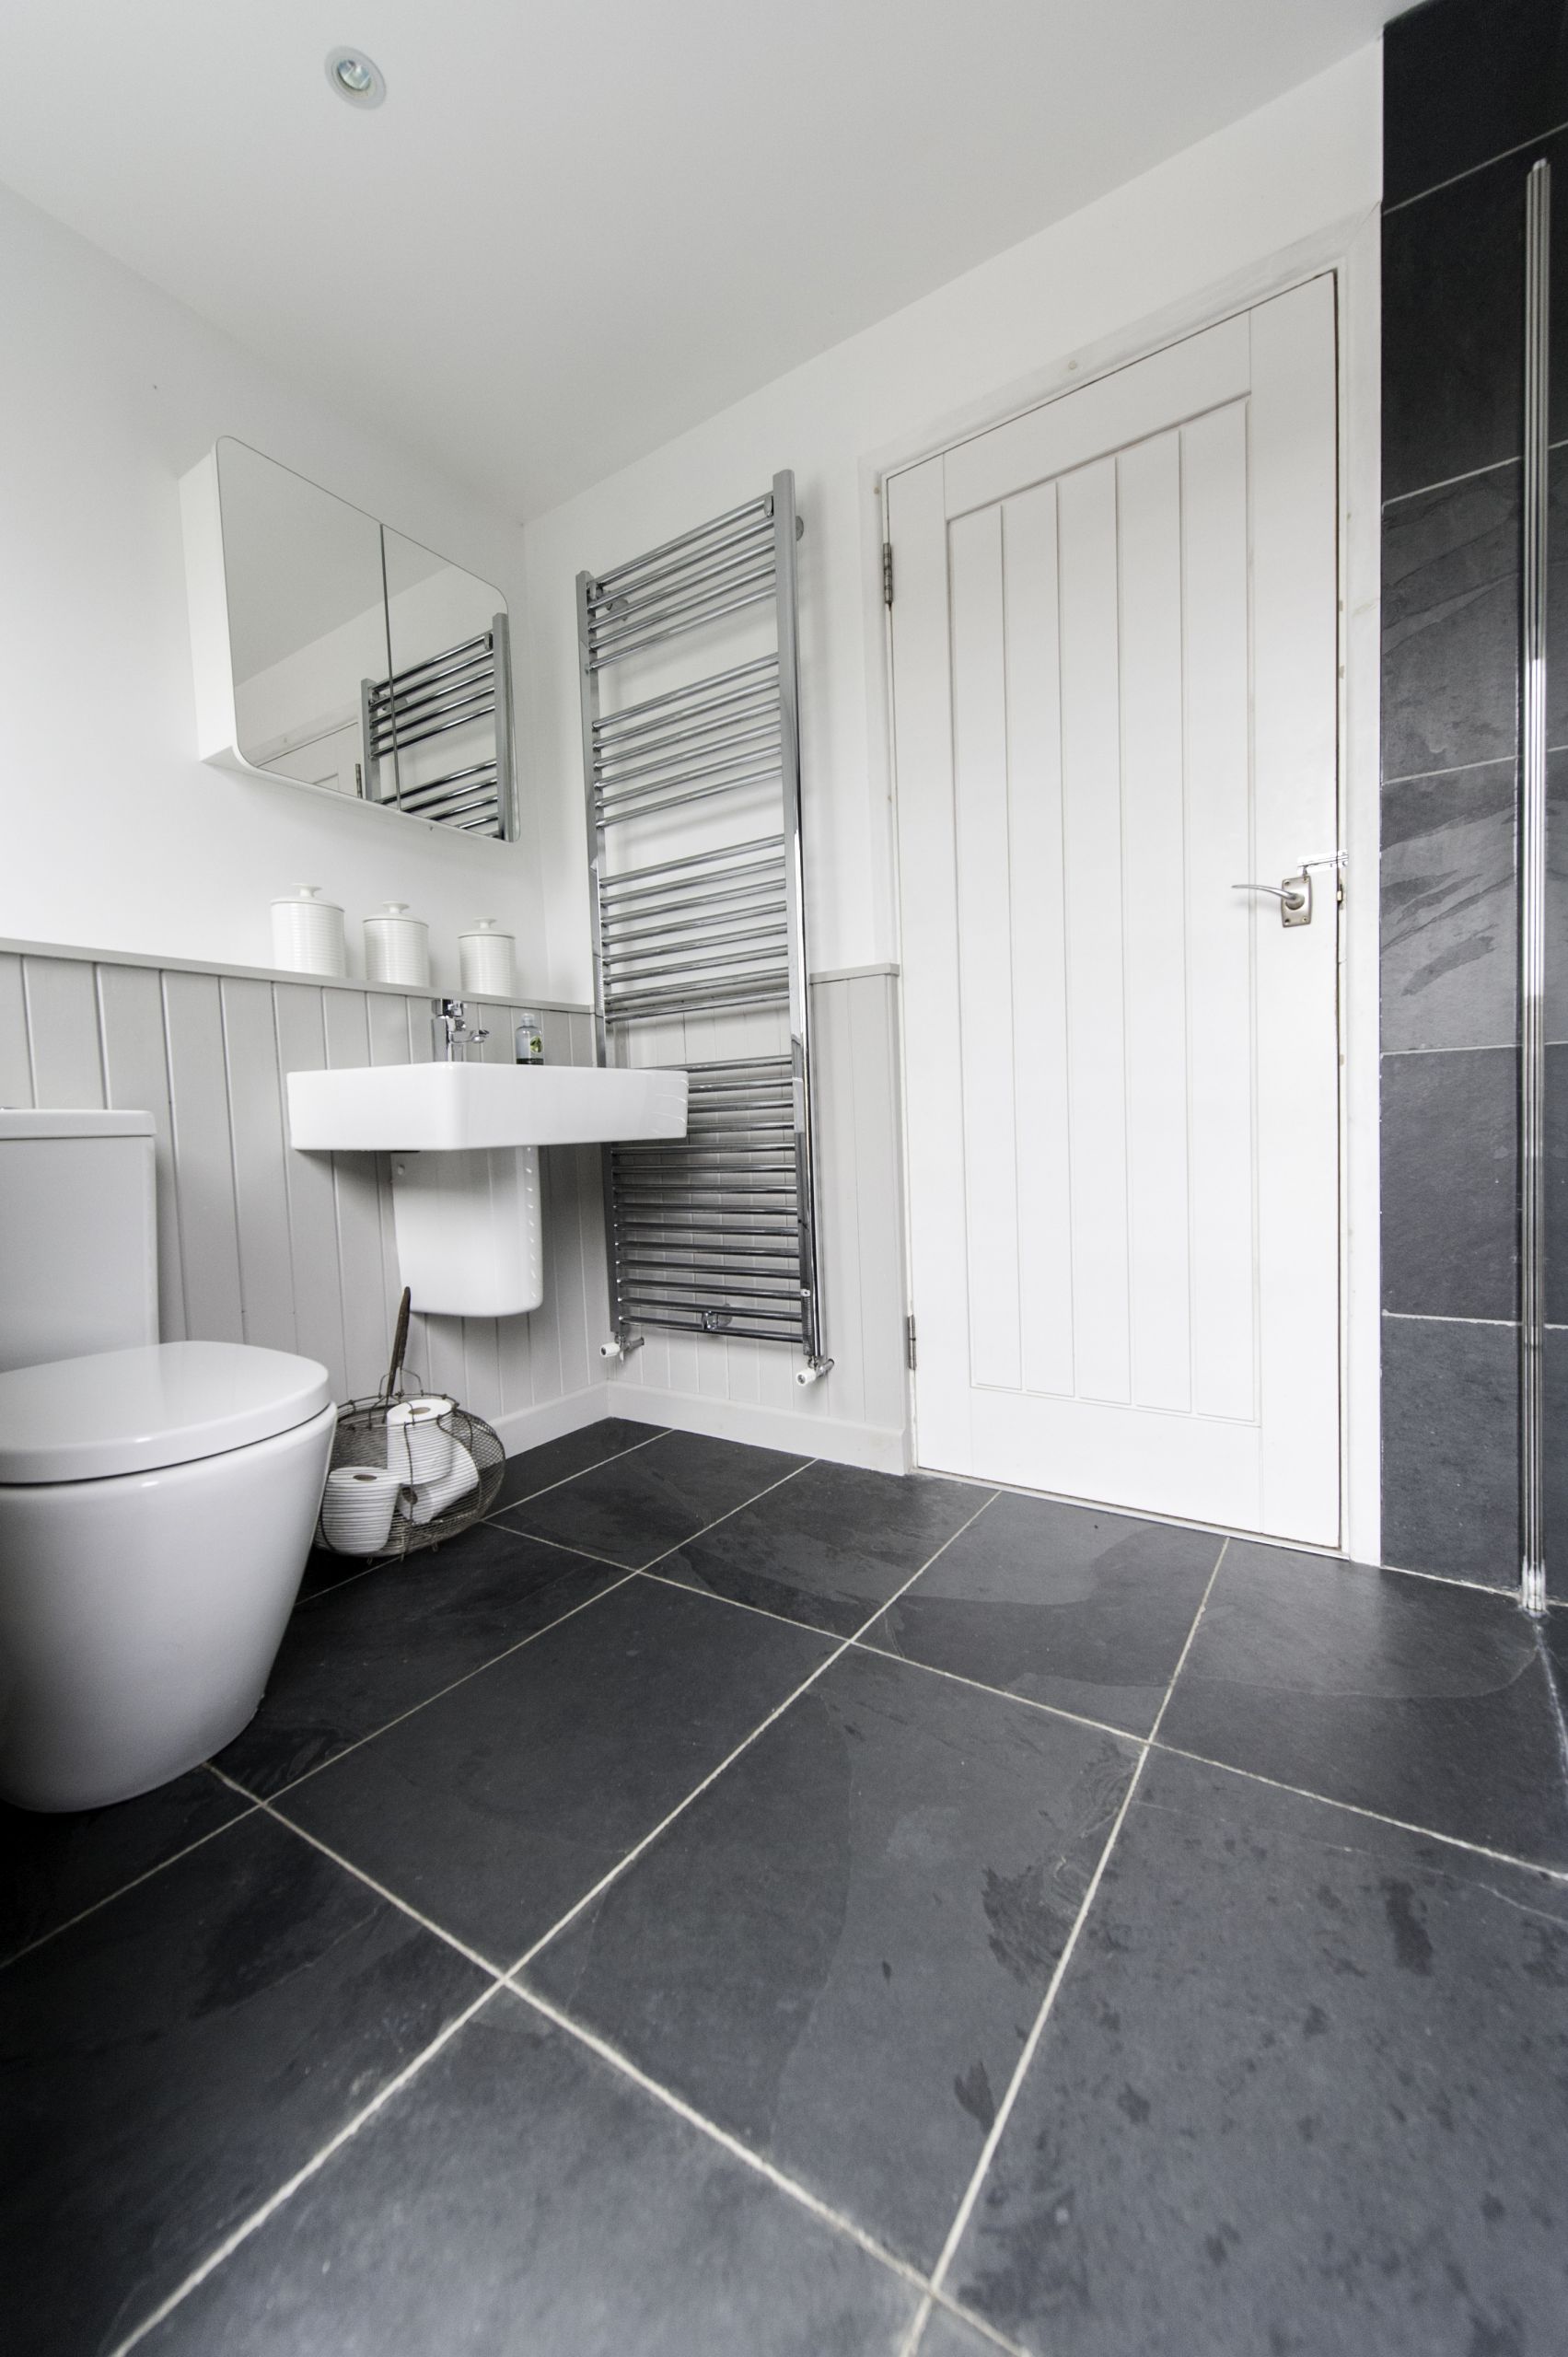 Slate Tile Bathroom Floor
 Slate Tiles Trays and Cladding for Bathrooms Showers